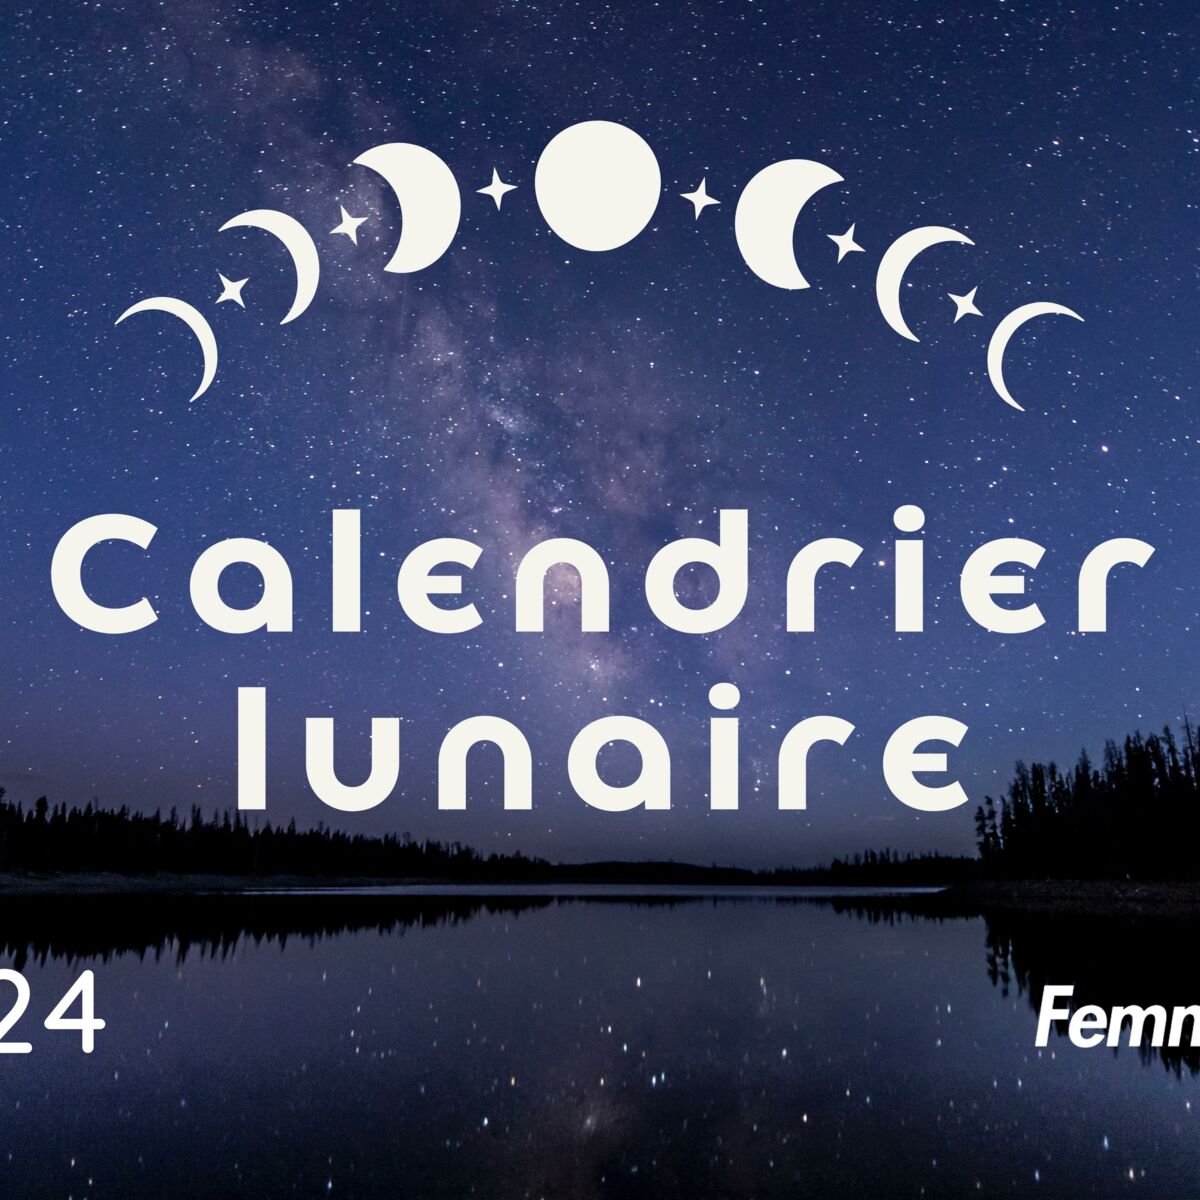 Calendrier lunaire juillet 2023